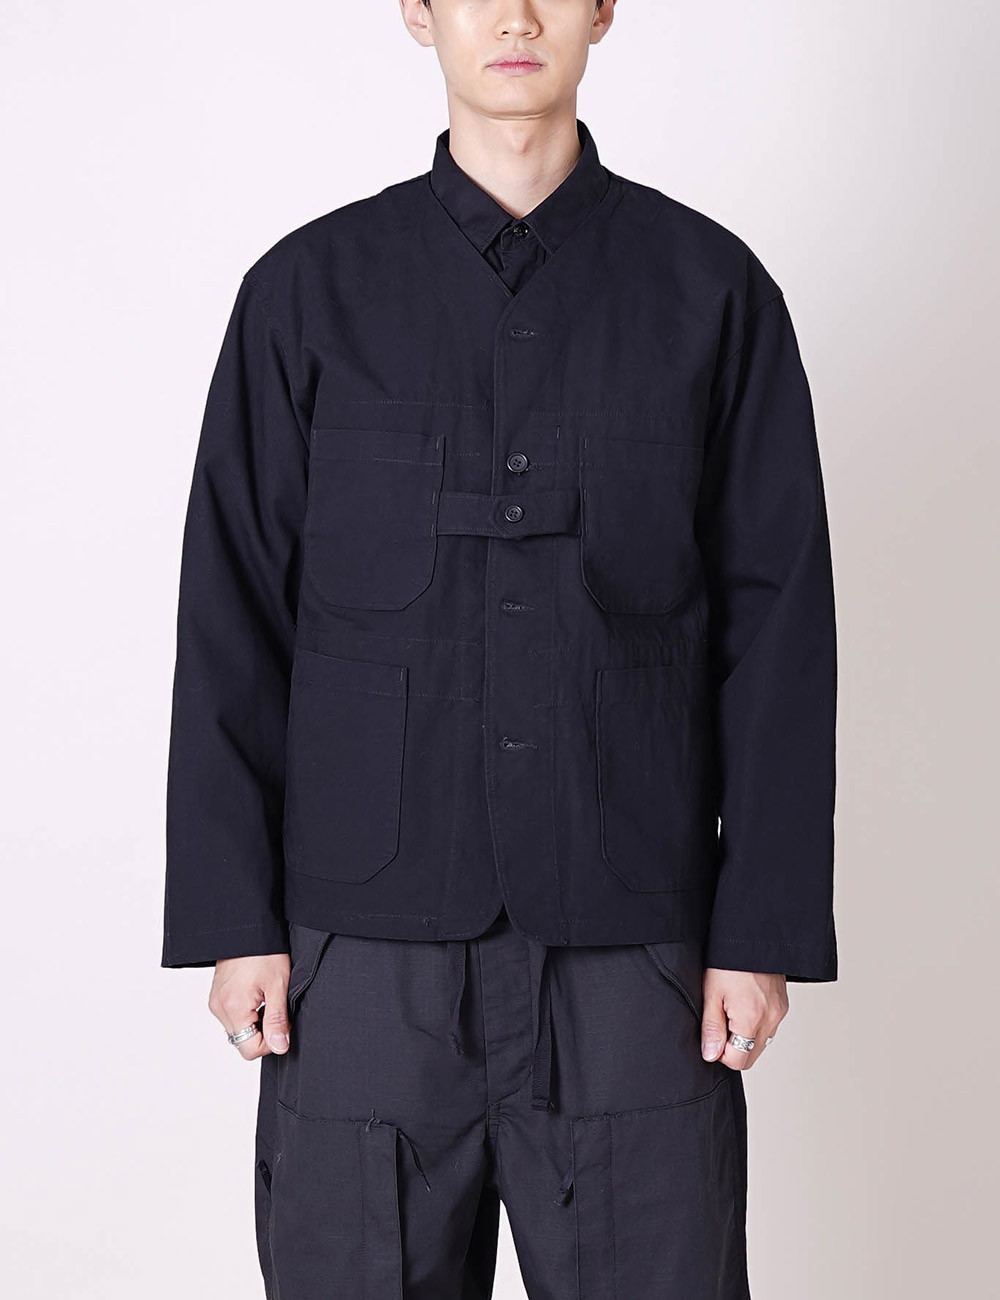 Engineered Garments : Cardigan Jacket (Black Heavyweight Cotton Ripstop)